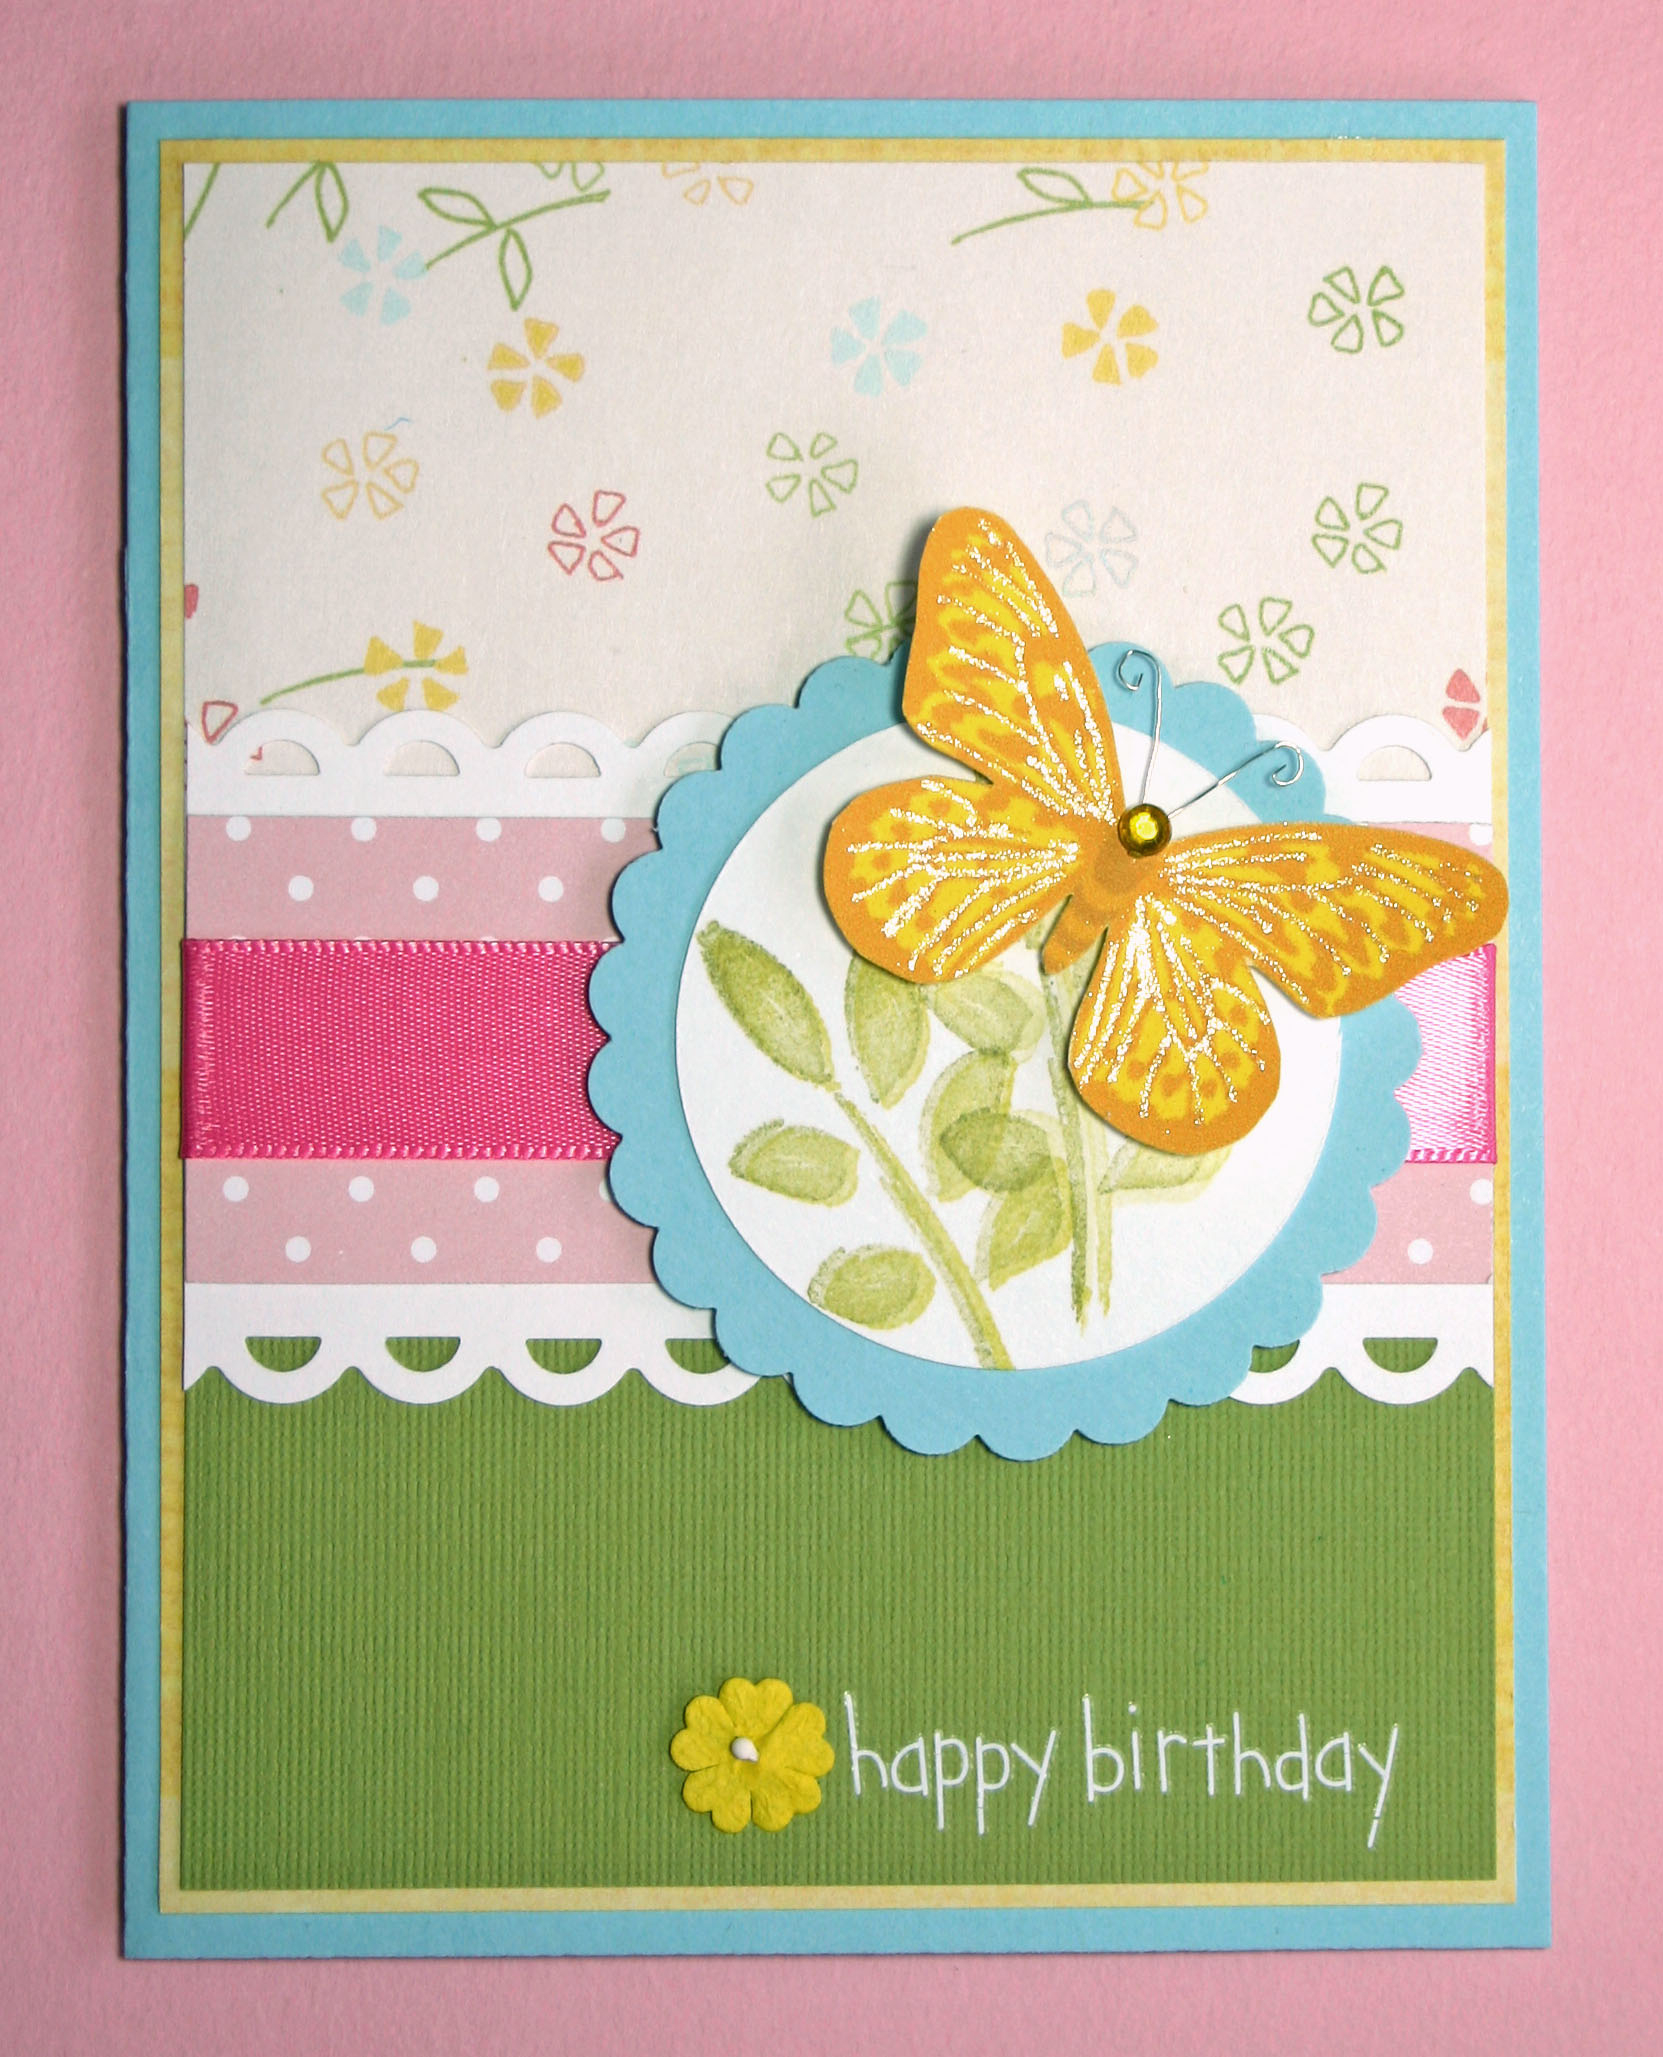 Cool Handmade Birthday Card Ideas St Birthday Cards For Granddaughter Cool Creative Birthday Card